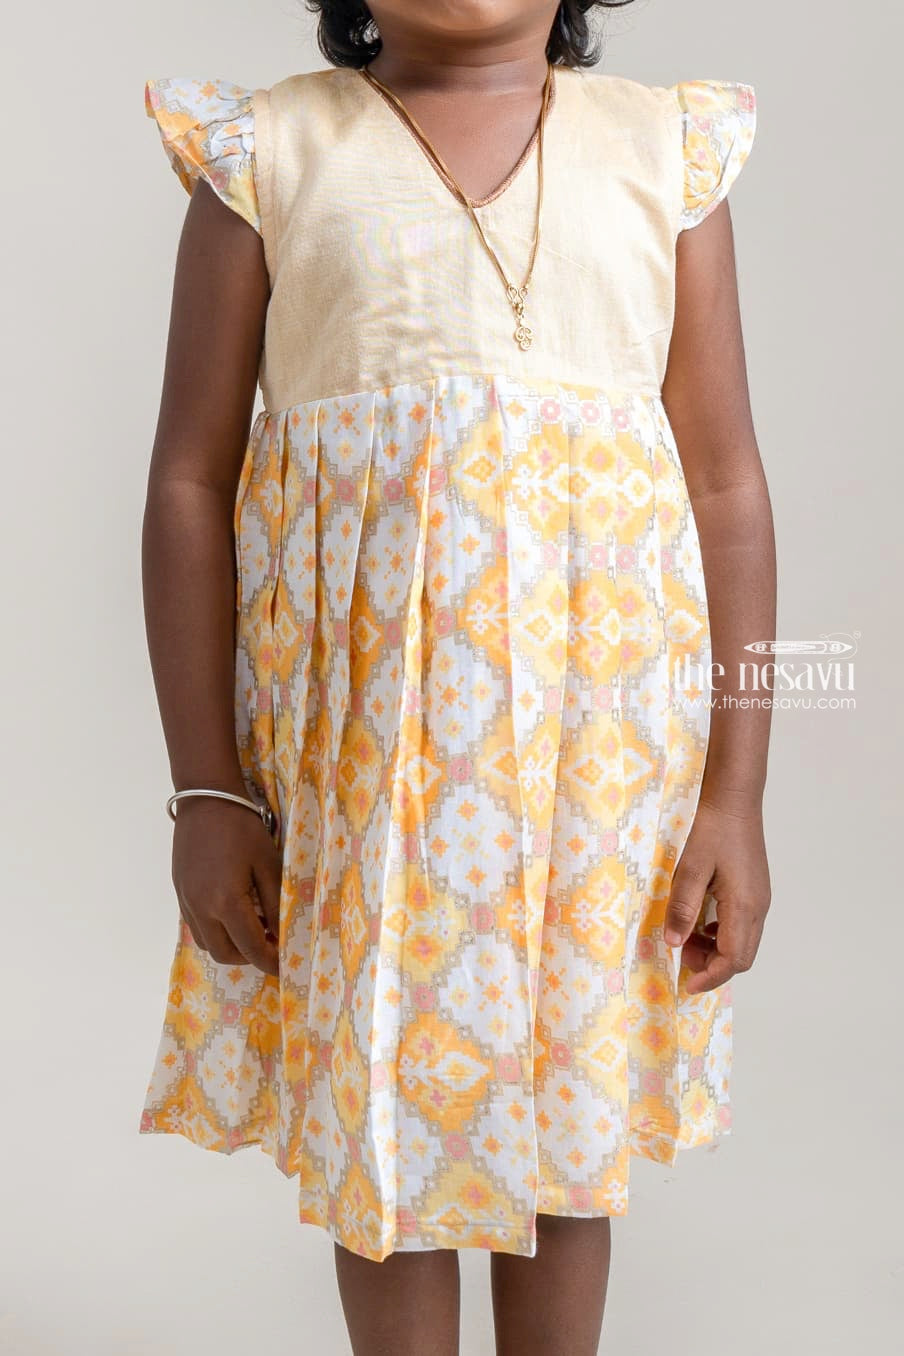 The Nesavu Girls Cotton Frock Stunning Yellow Geometrical Printed Casual Cotton Frock For Girls Nesavu Stunning Yelllow Cotton Frocks For Girls | Girls Premium Collection | The Nesavu